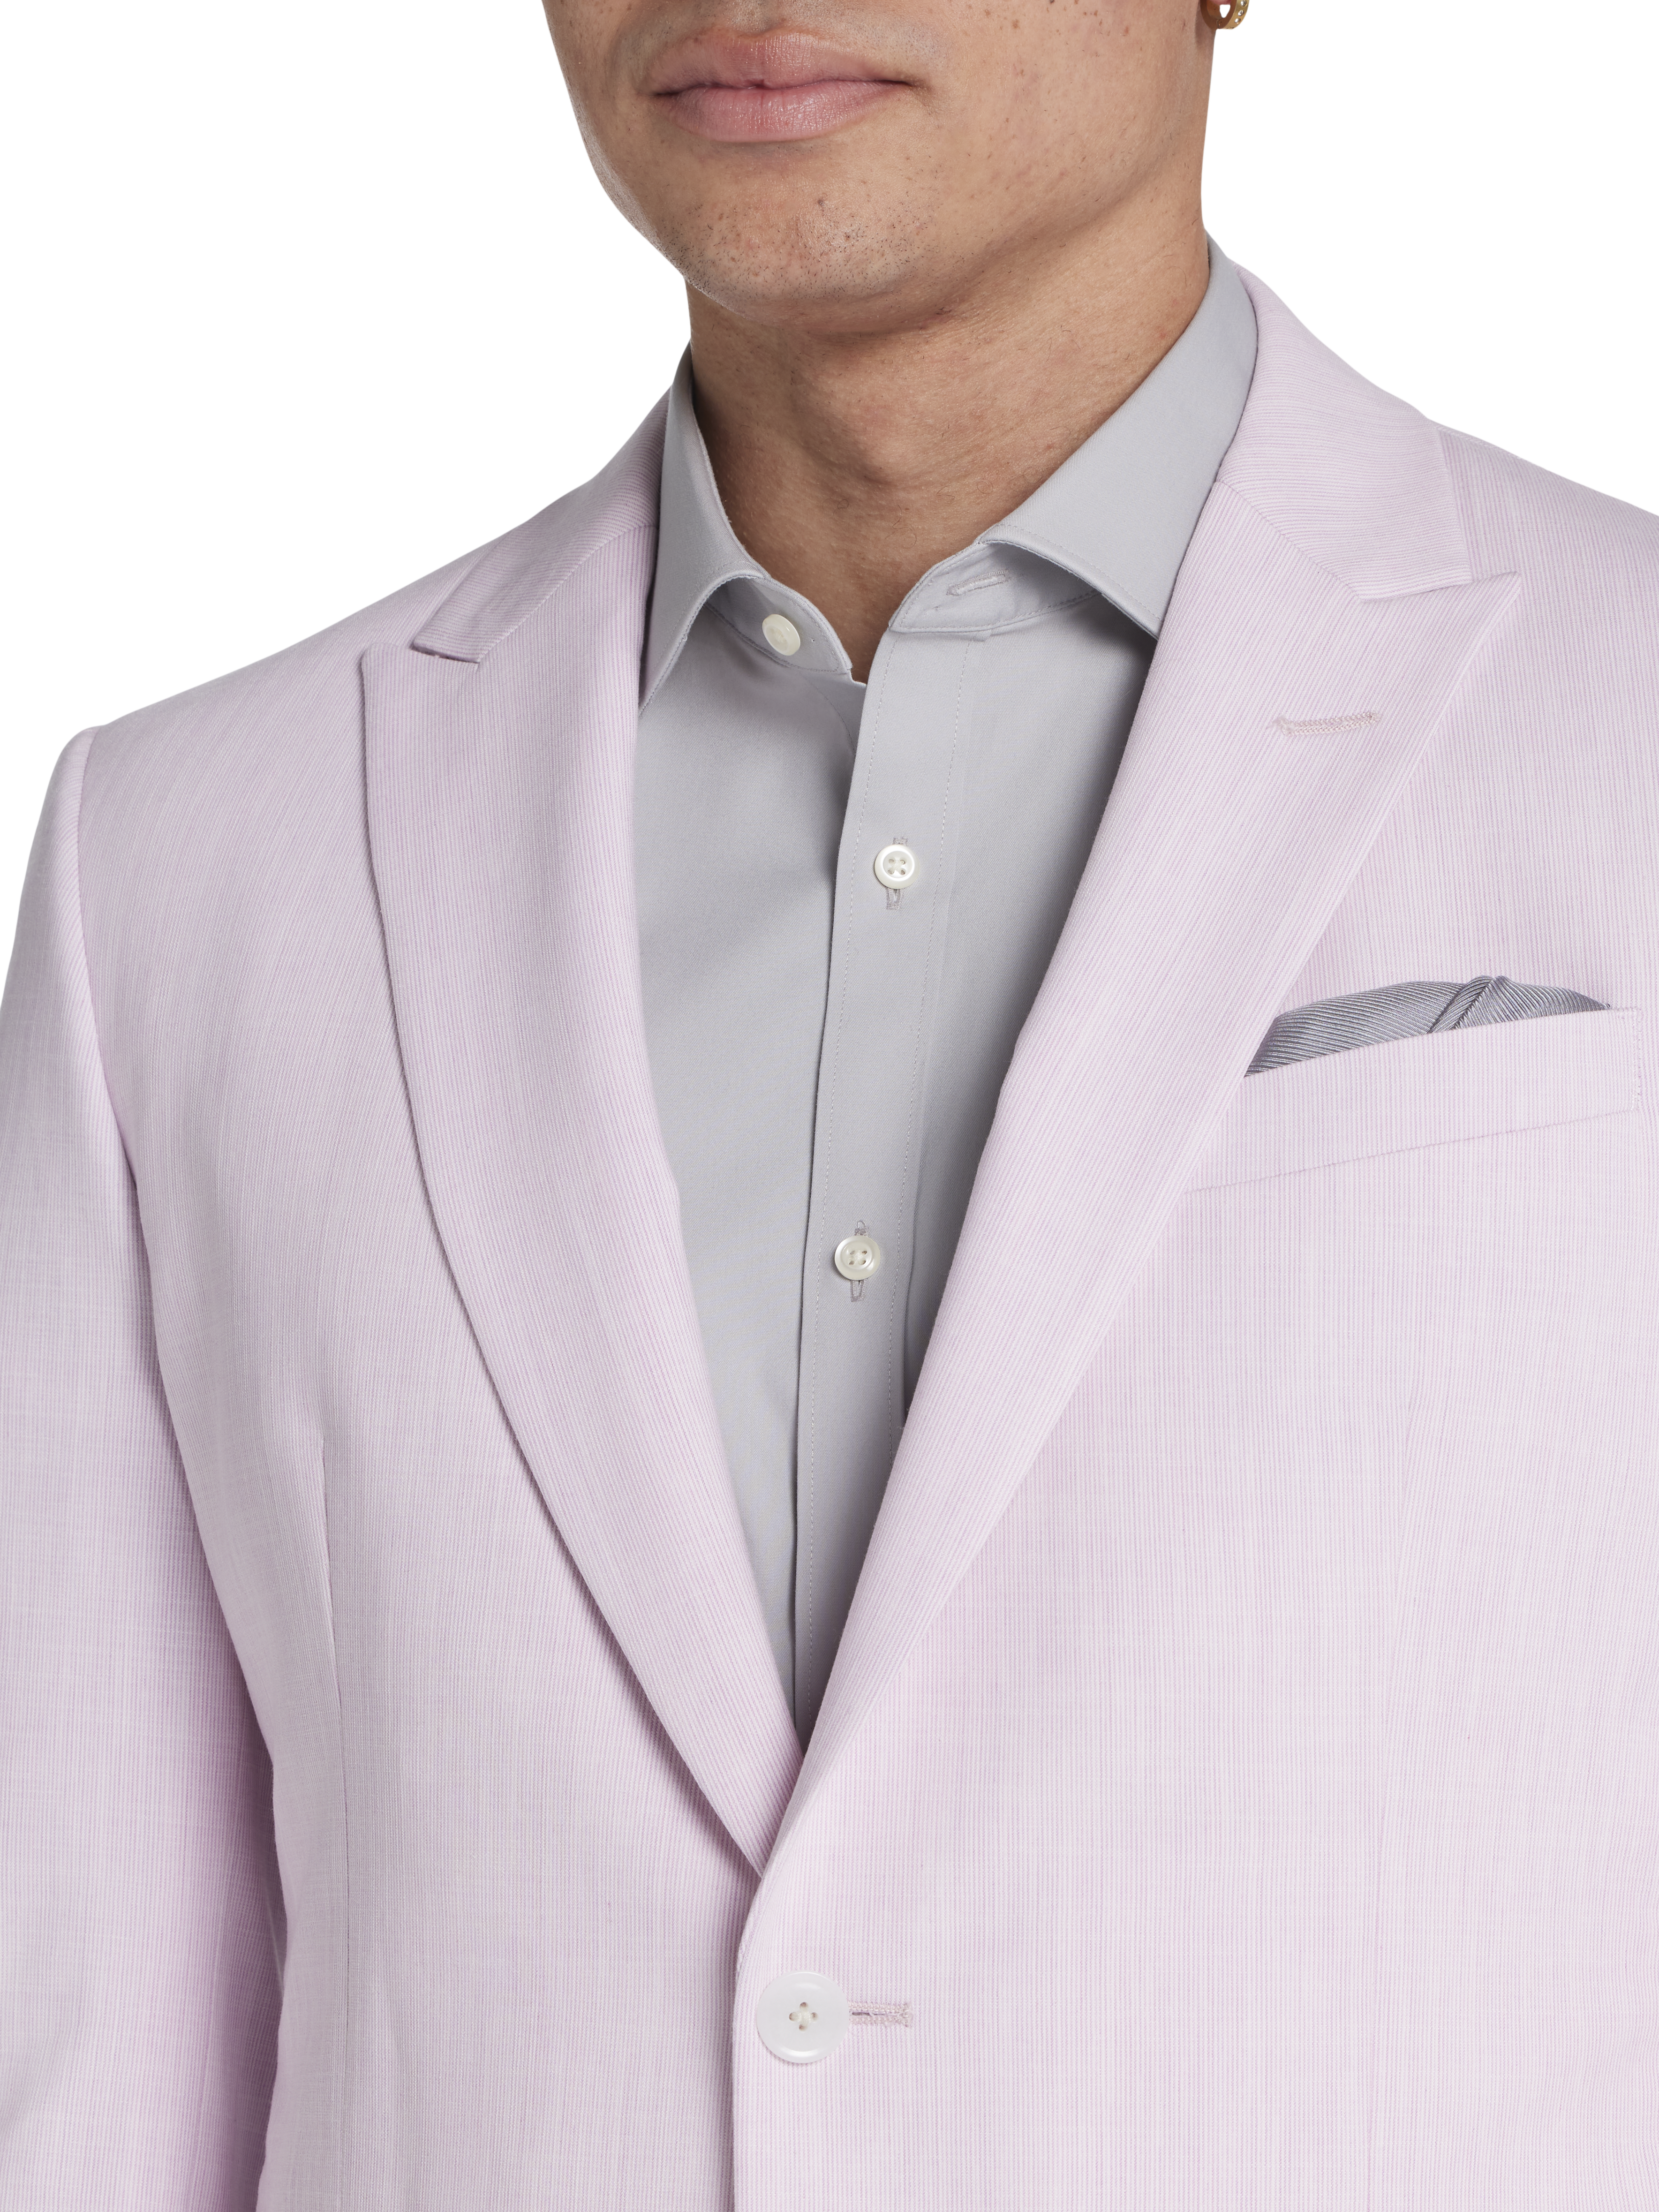 Skinny Fit Peak Lapel Stripe Suit Separates Jacket